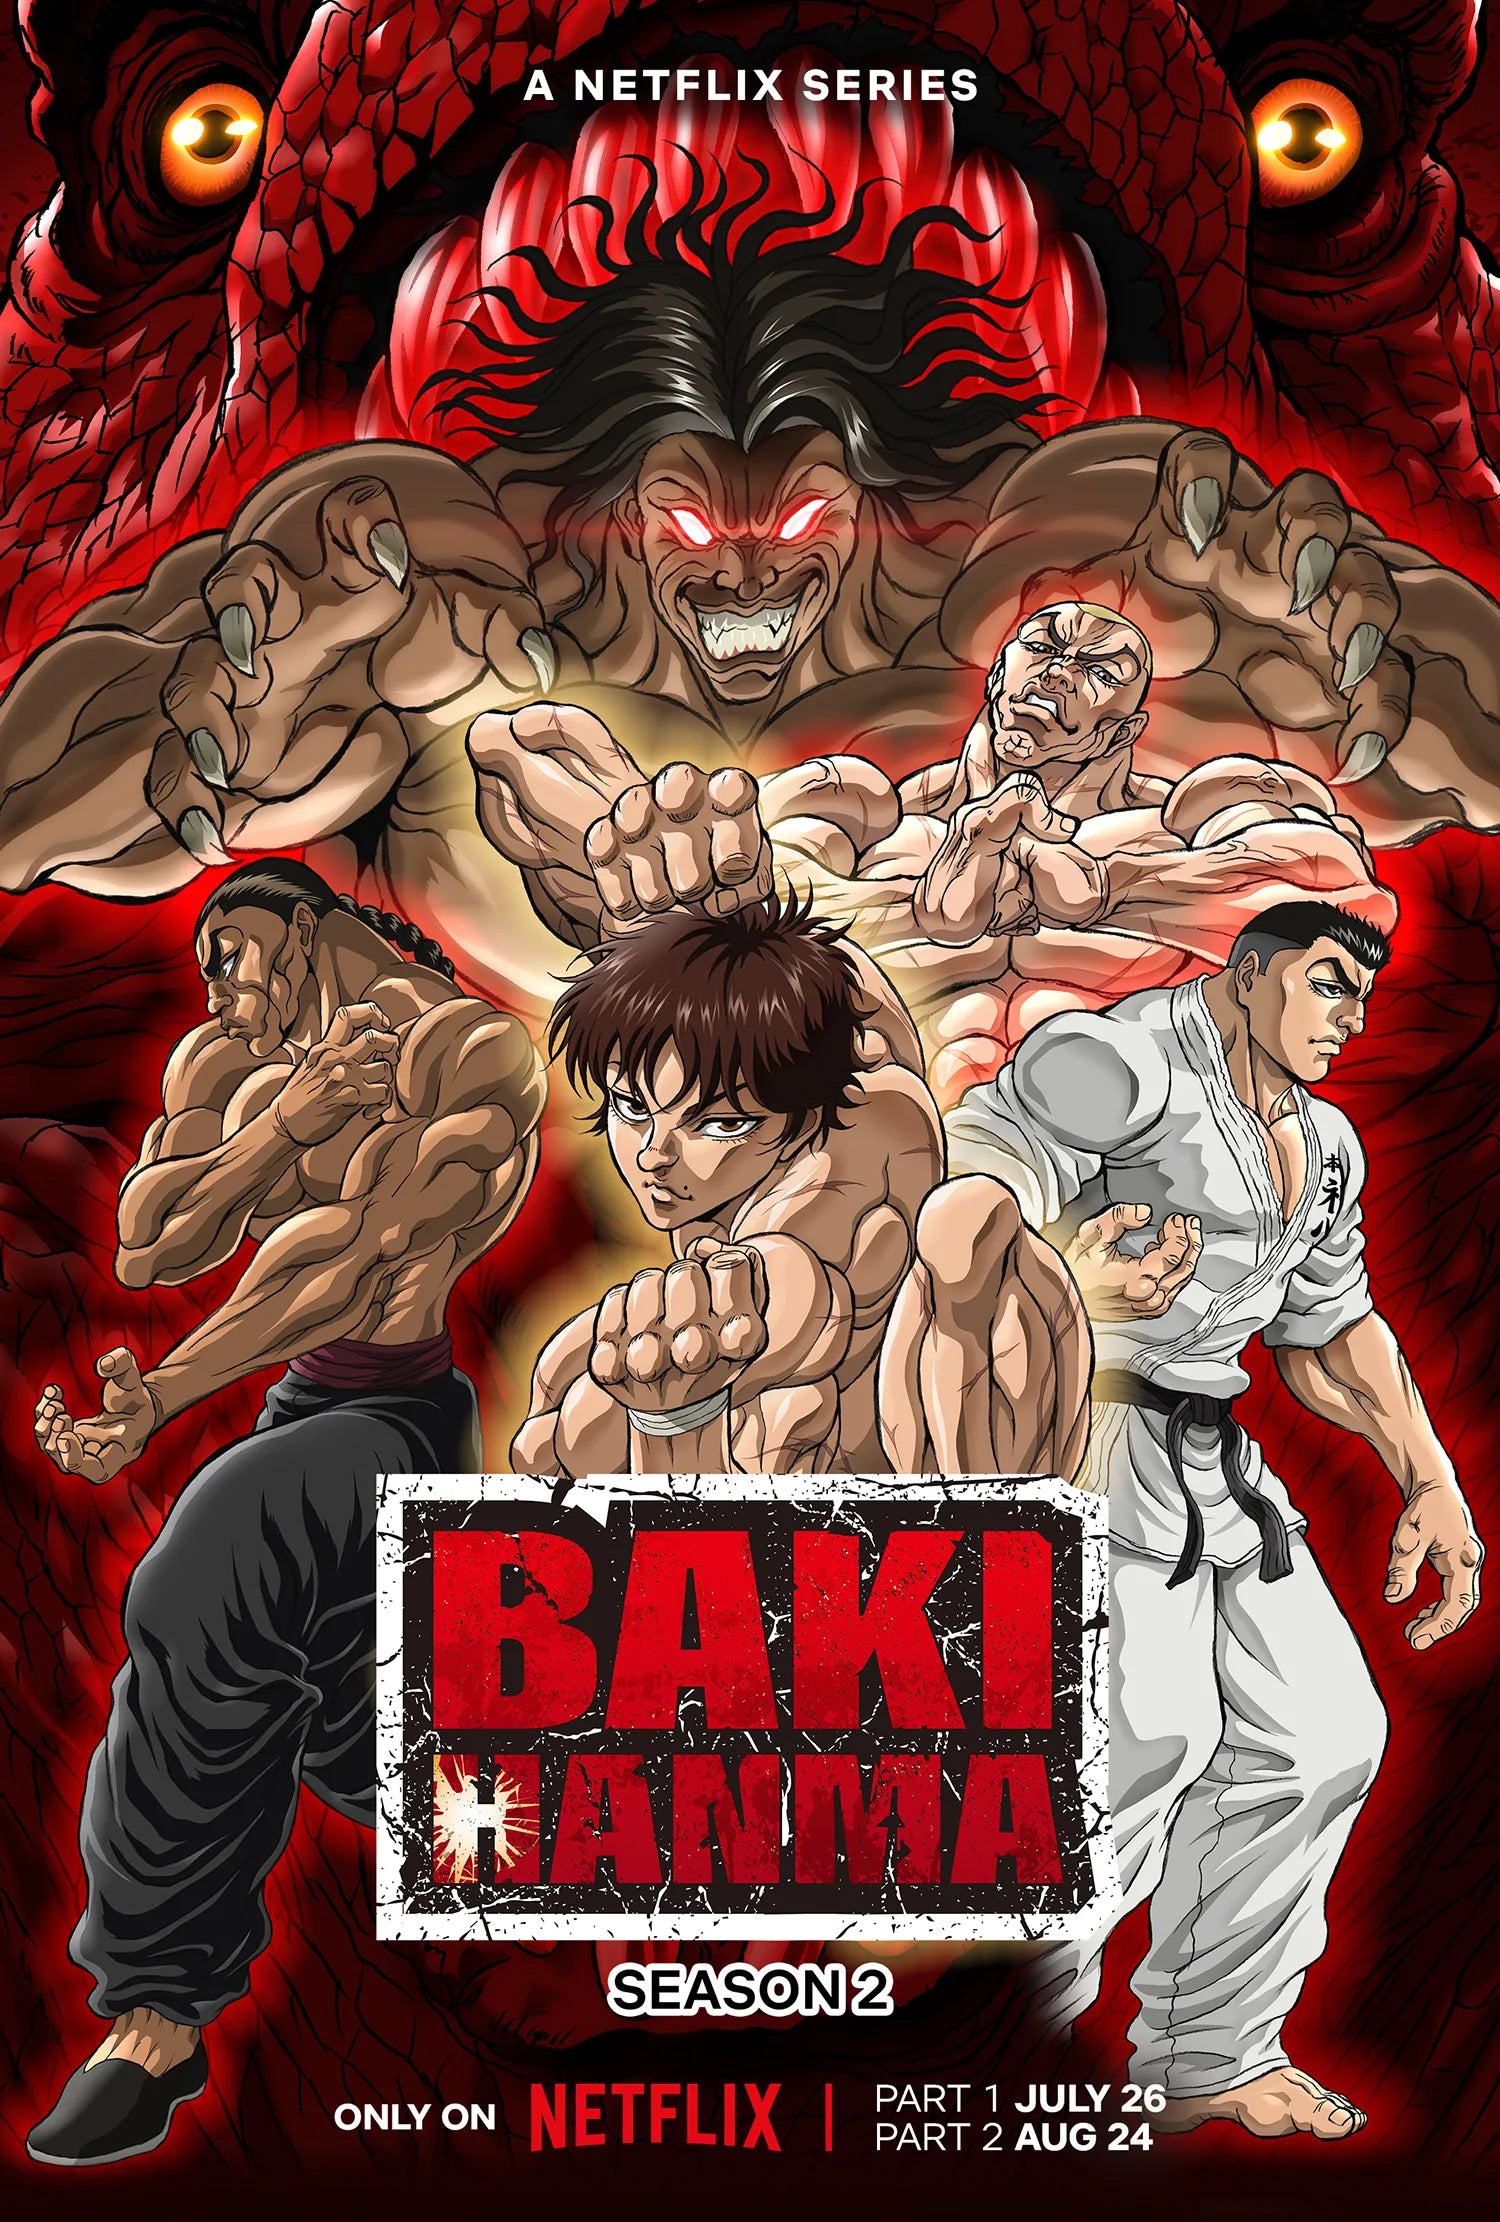 Baki Hanma Anime to Return with Season 2